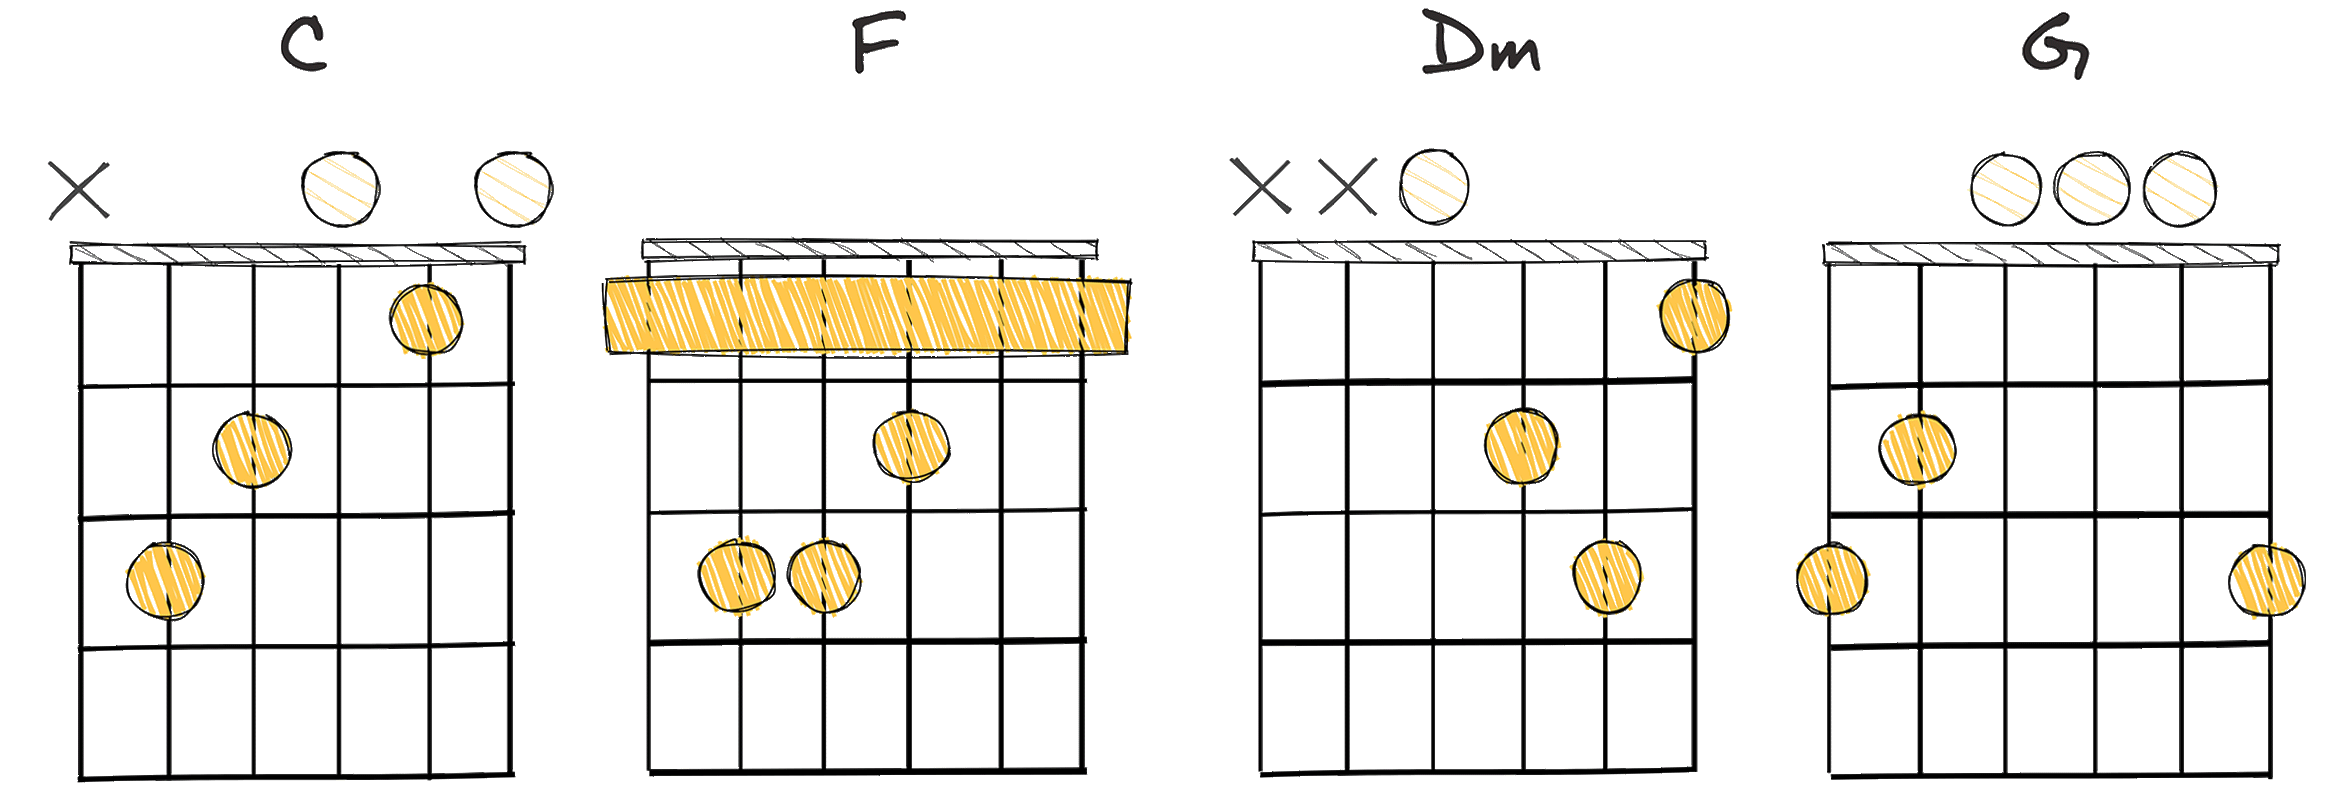 I-IV-ii-V (1-4-2-5) chords diagram